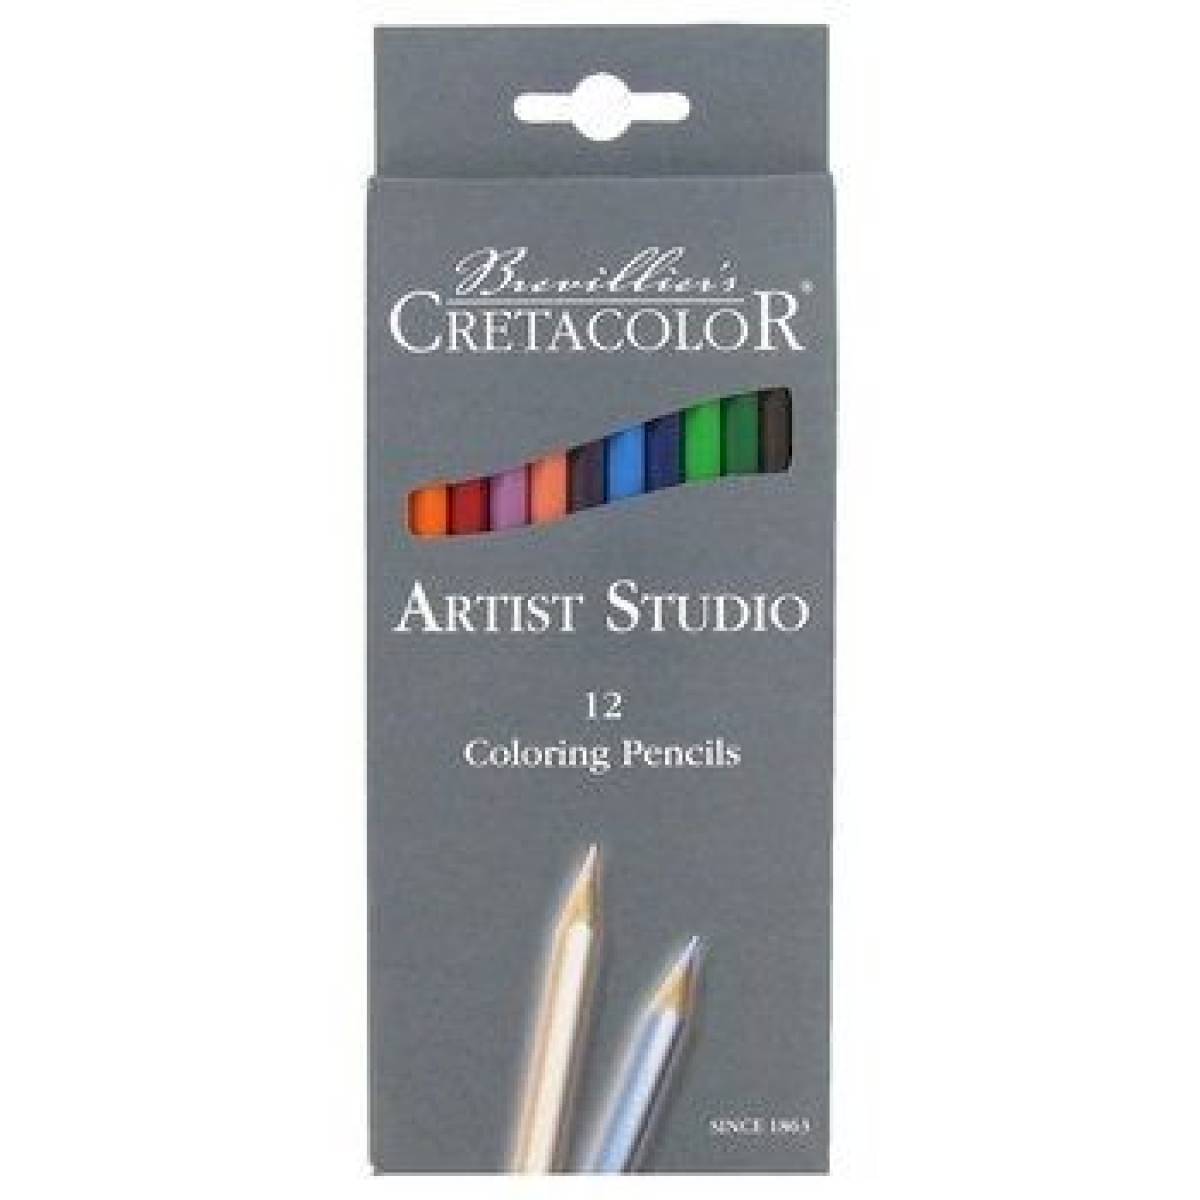 Brevillier's - 12 crayons Artist Studio Coloring